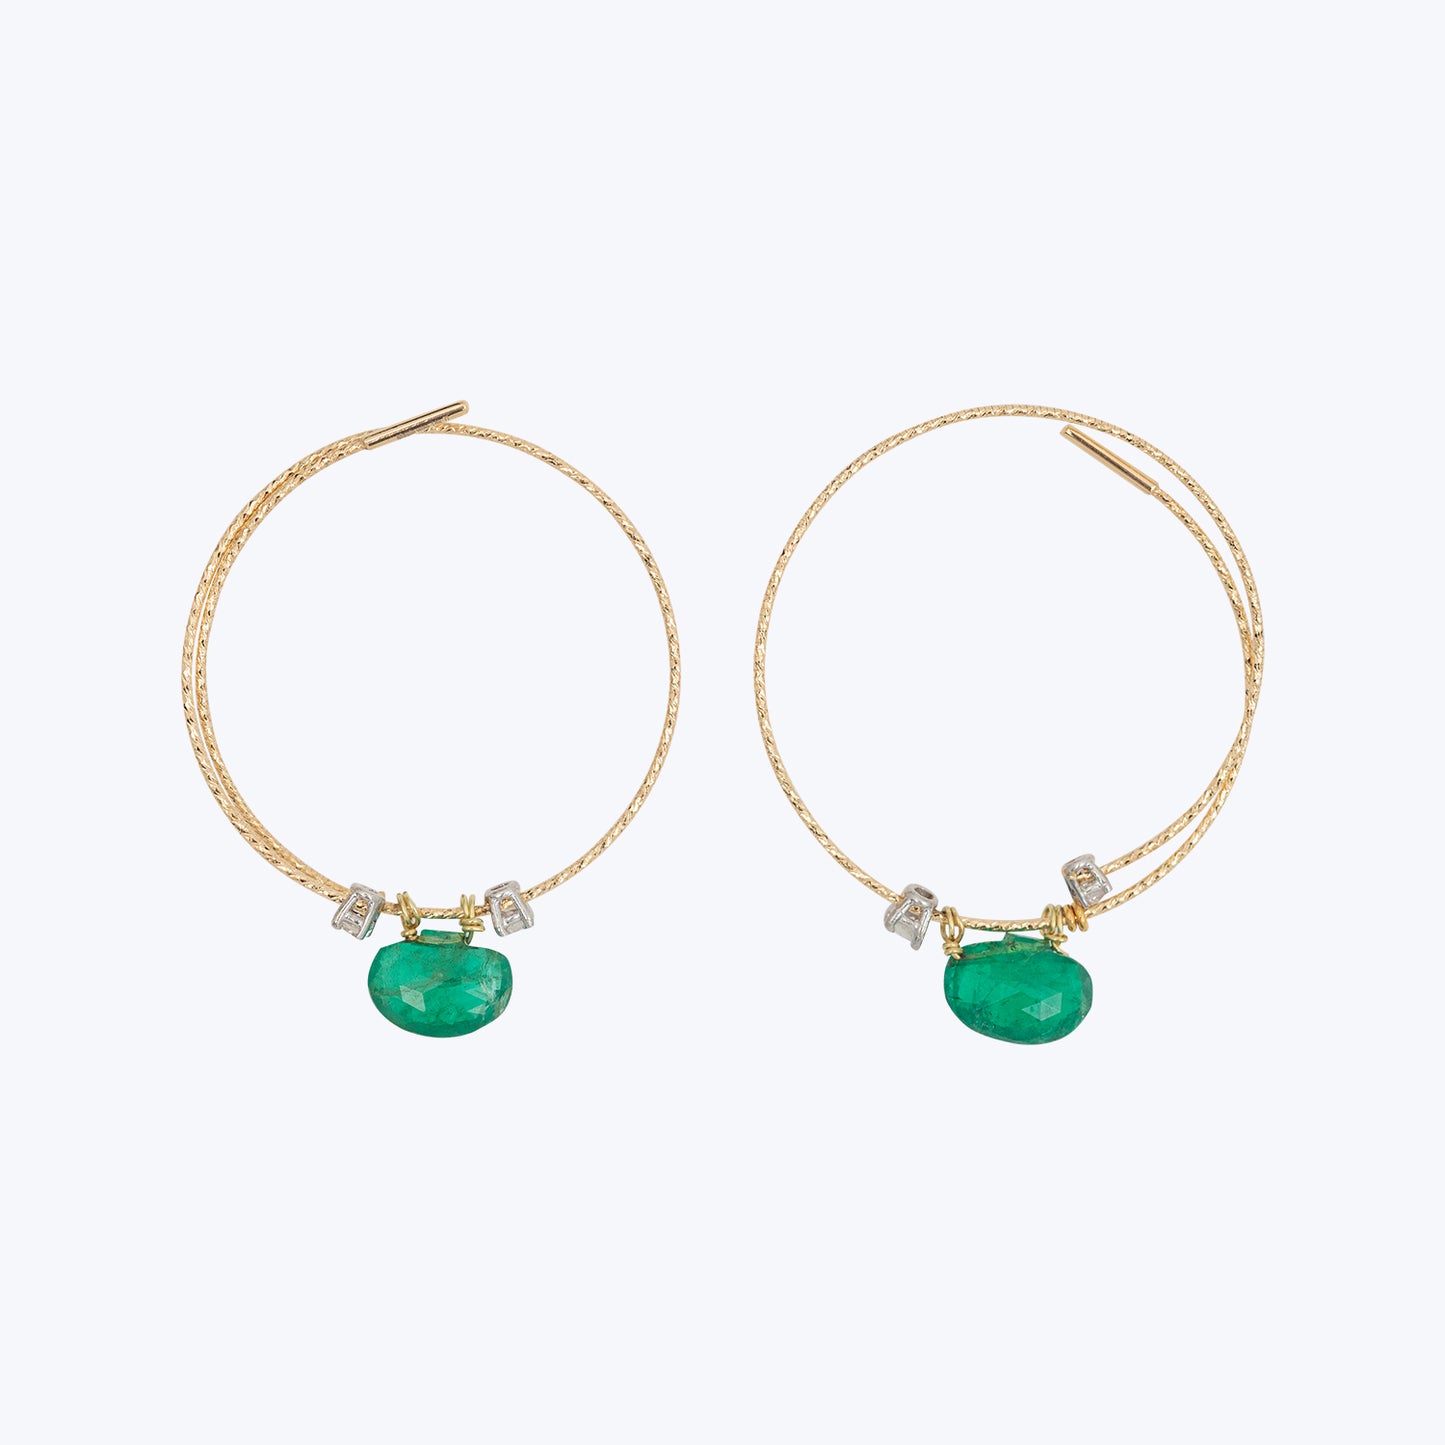 18K Yellow Gold Earrings with Diamonds, and  Zambian Emerald Pendant